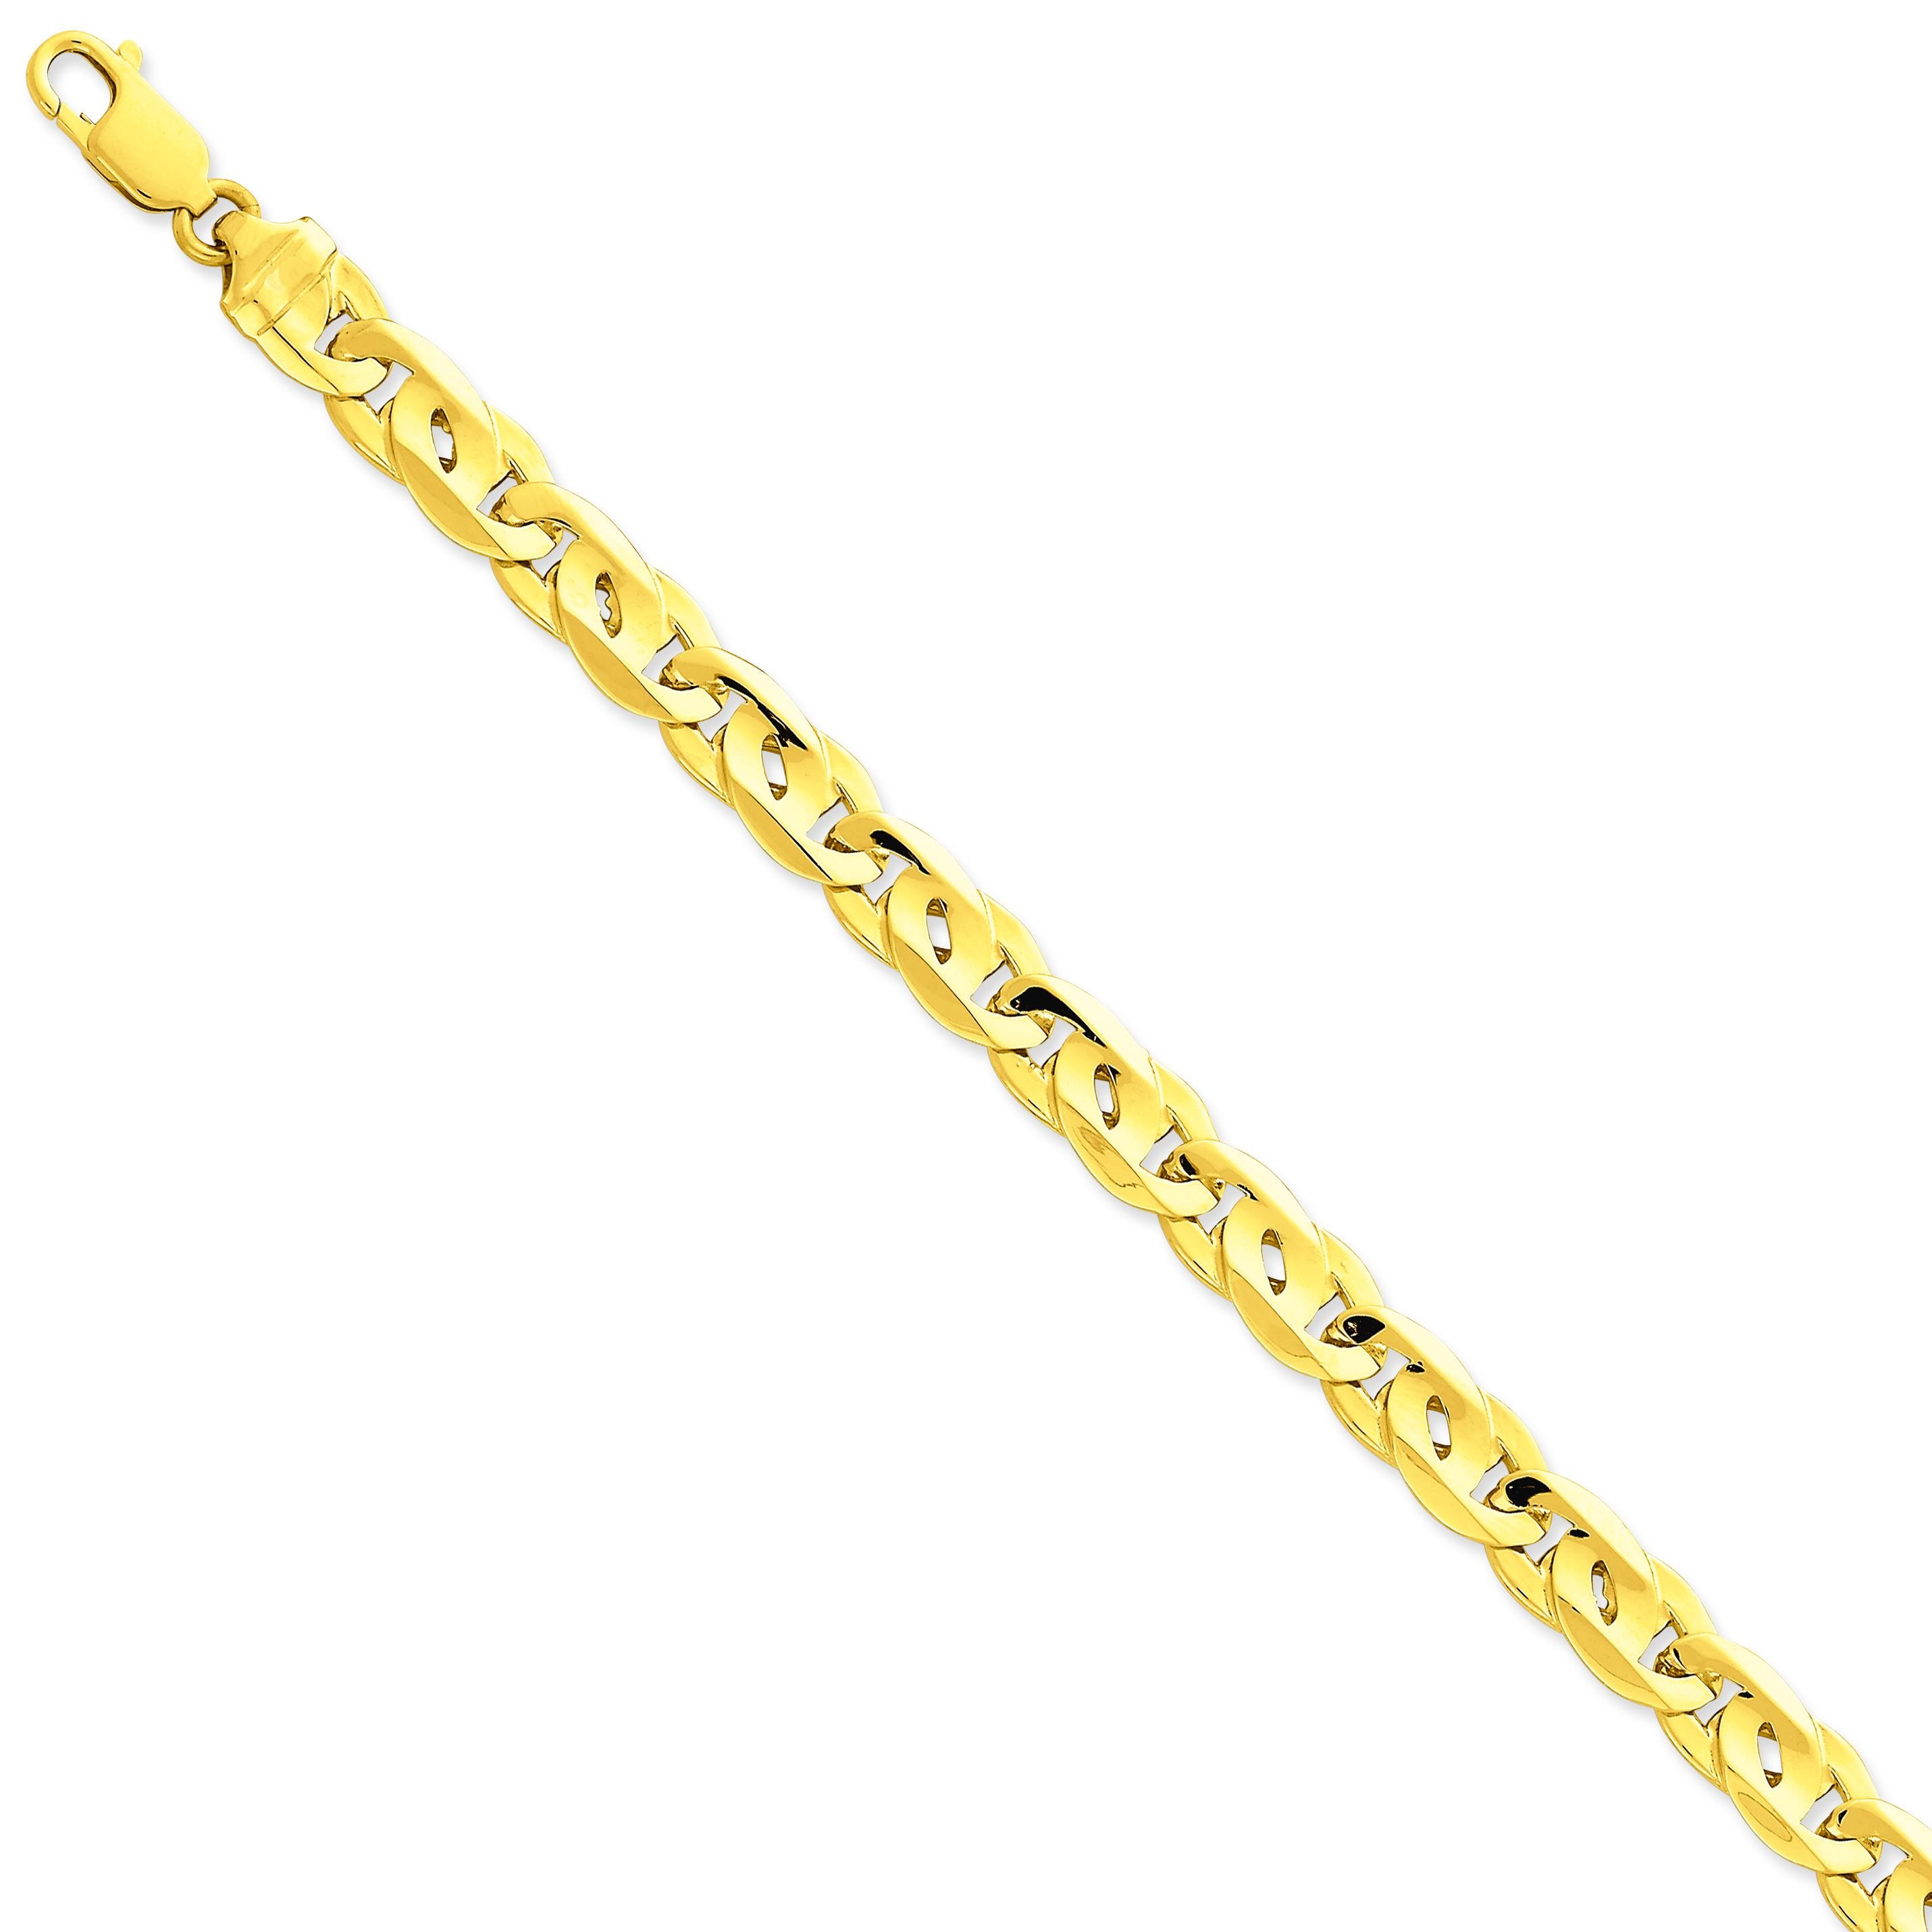 9mm Hand Link Bracelet in 14k Yellow Gold